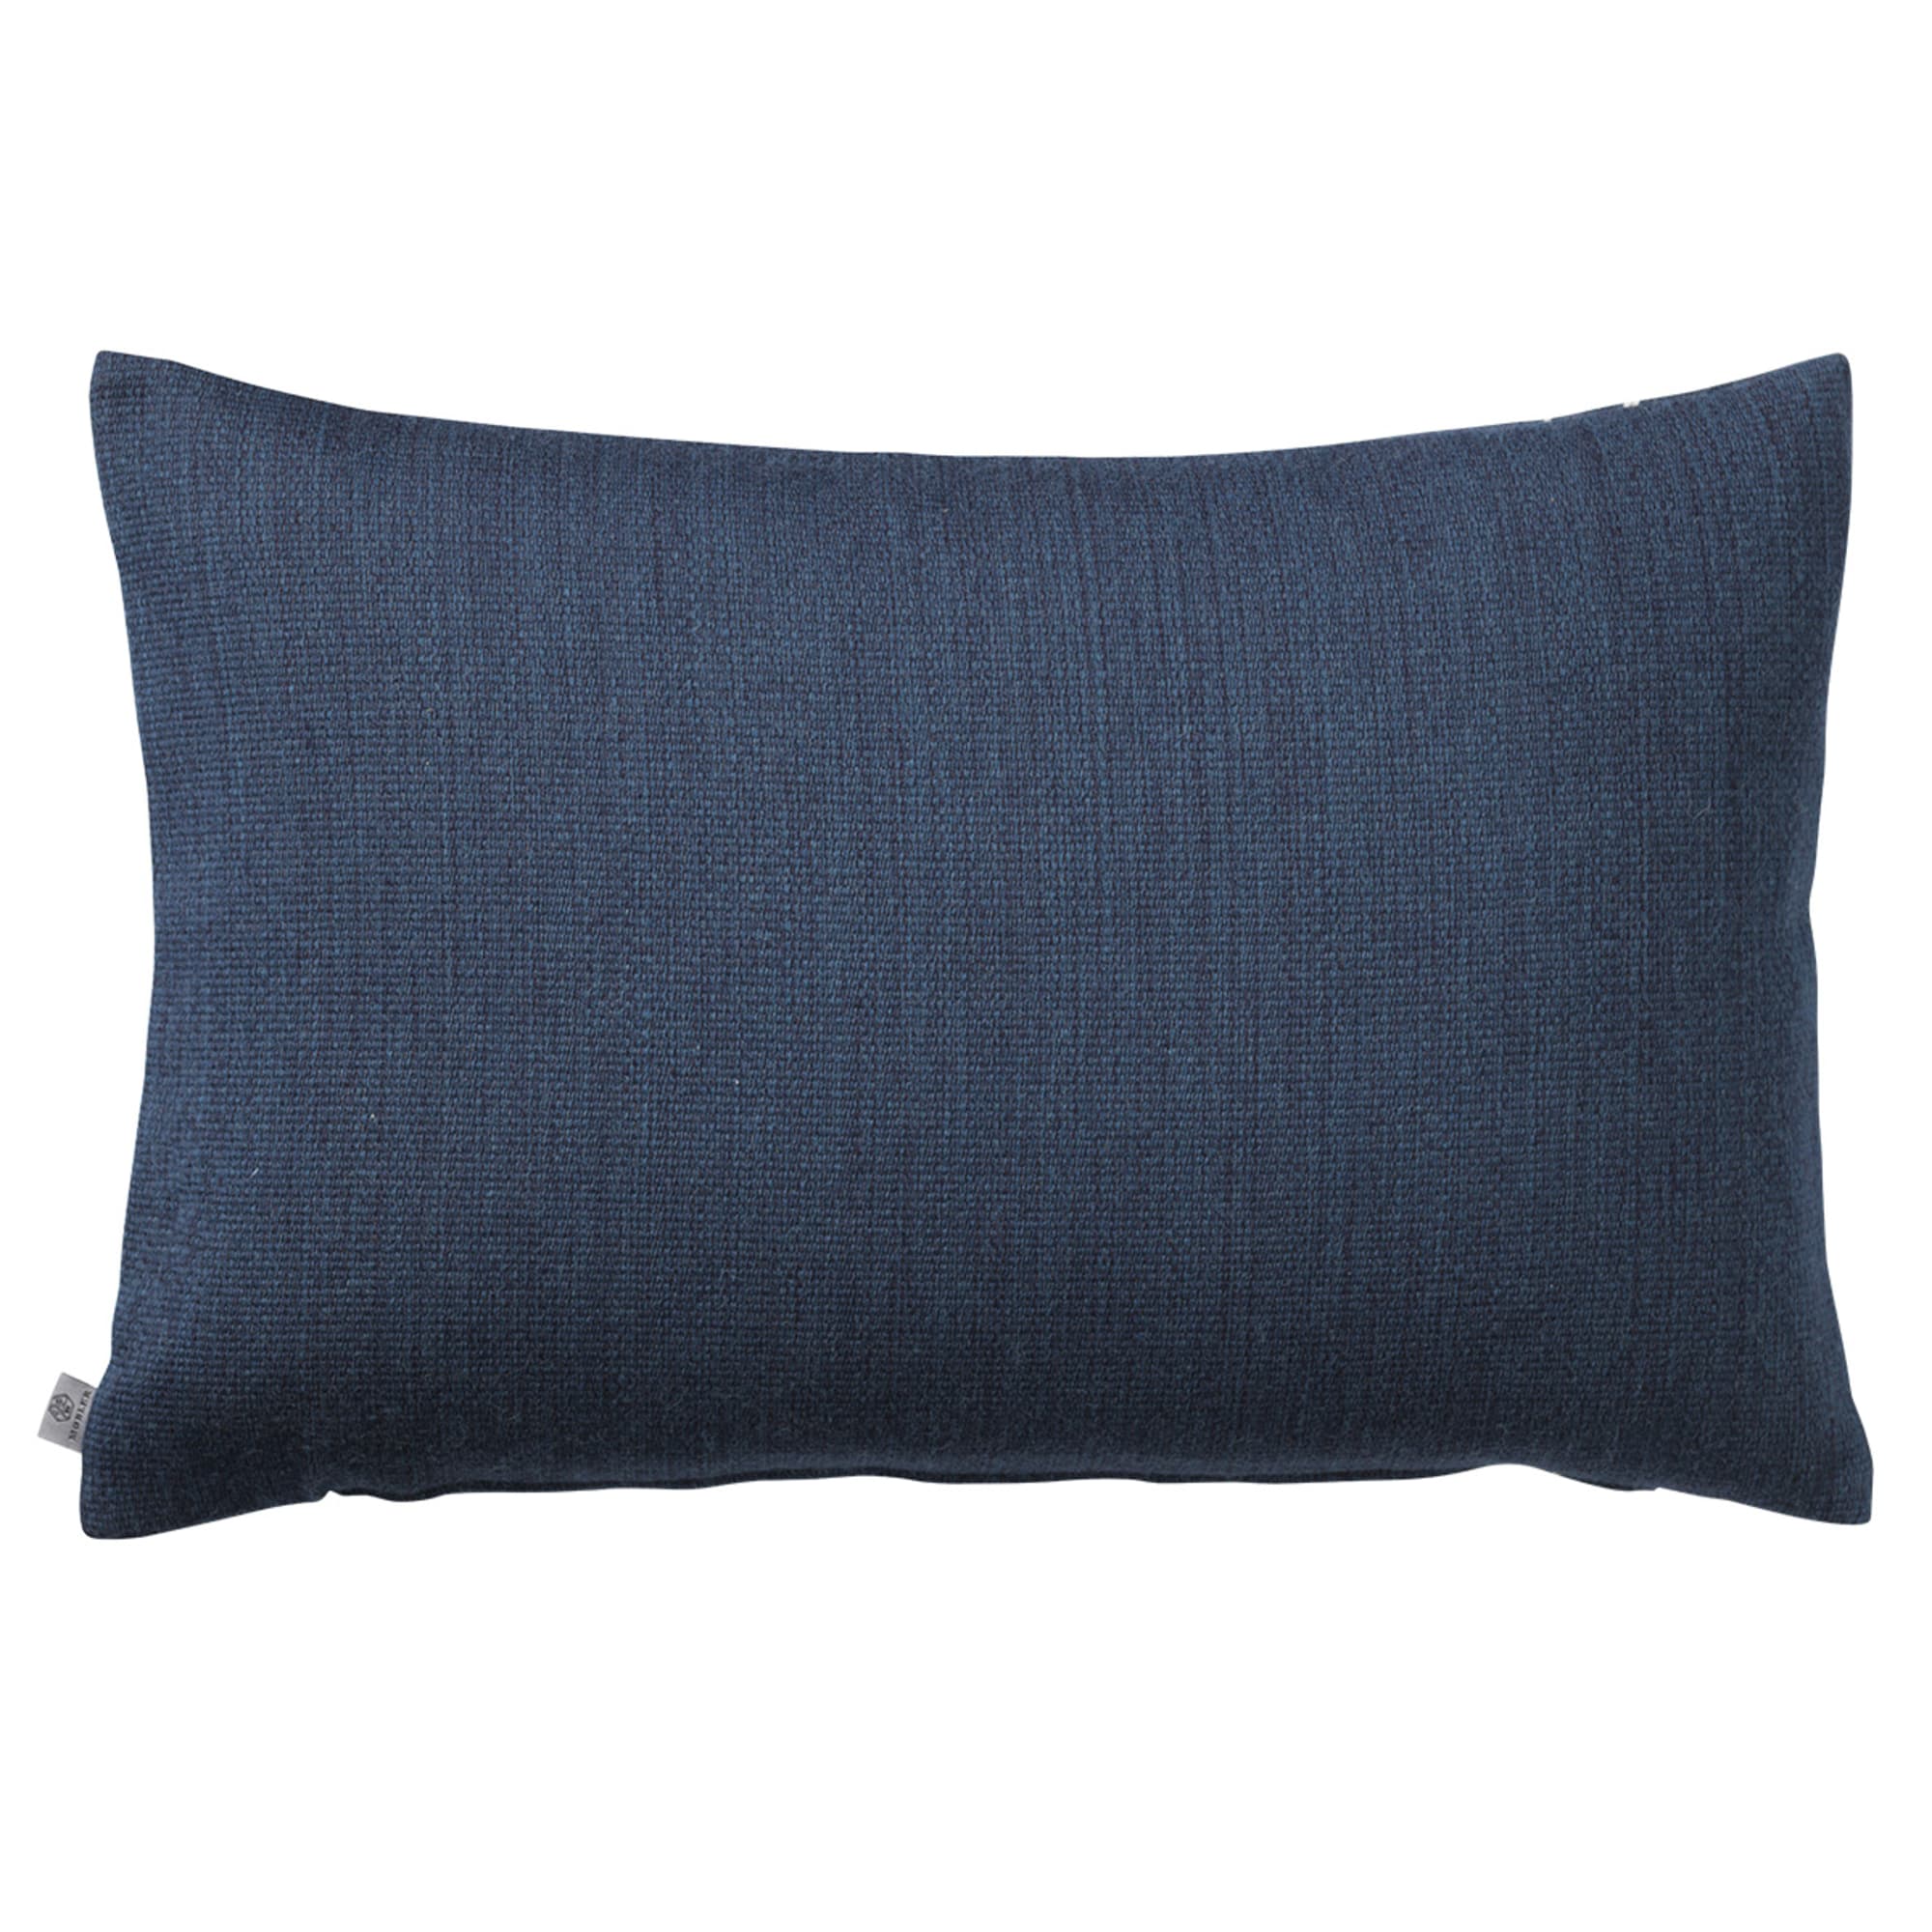 Fdb Møbler R17 Råbjerg Cushion Blue, 40x60cm